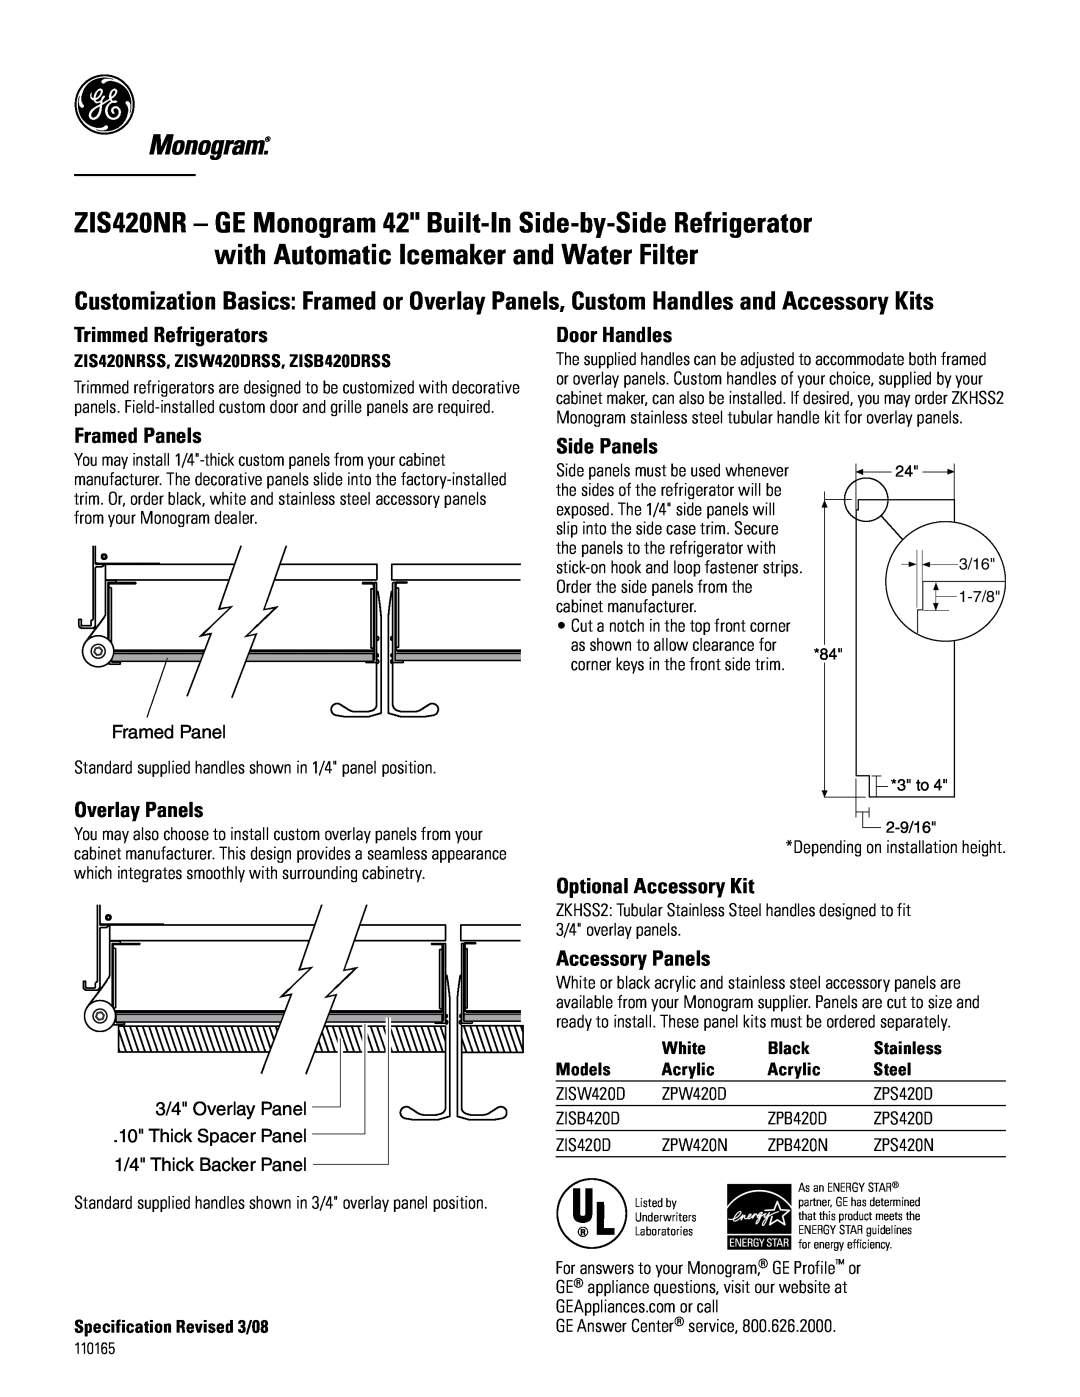 GE Monogram ZIS420NR Trimmed Refrigerators, Framed Panels, Overlay Panels, Door Handles, Side Panels, Accessory Panels 